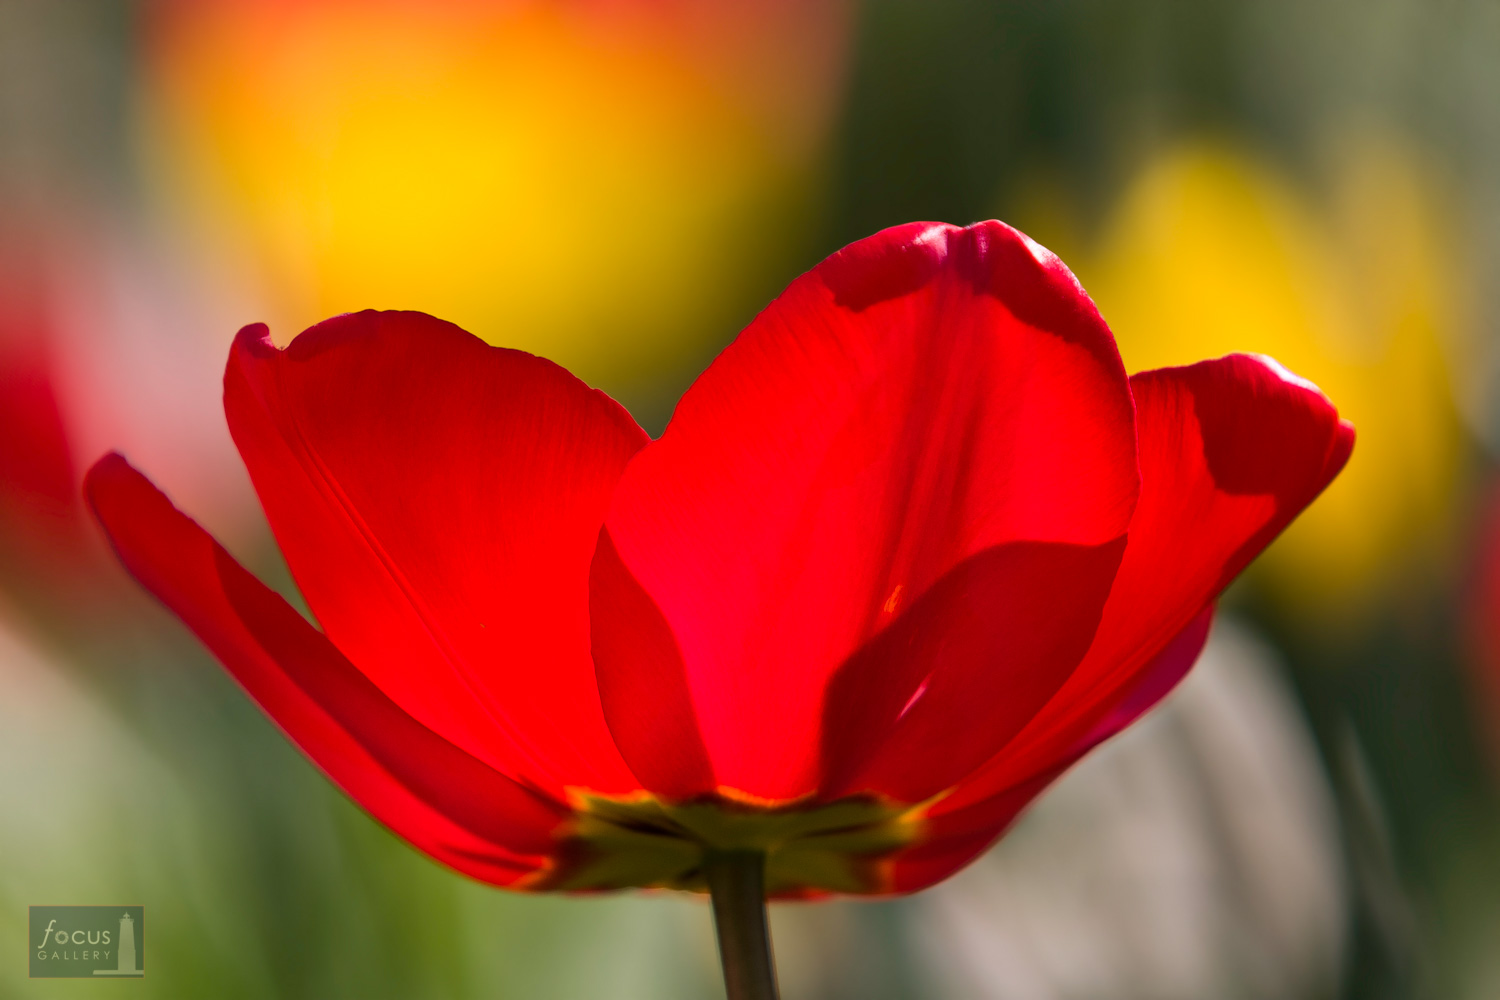 Red tulip blossom close-up.